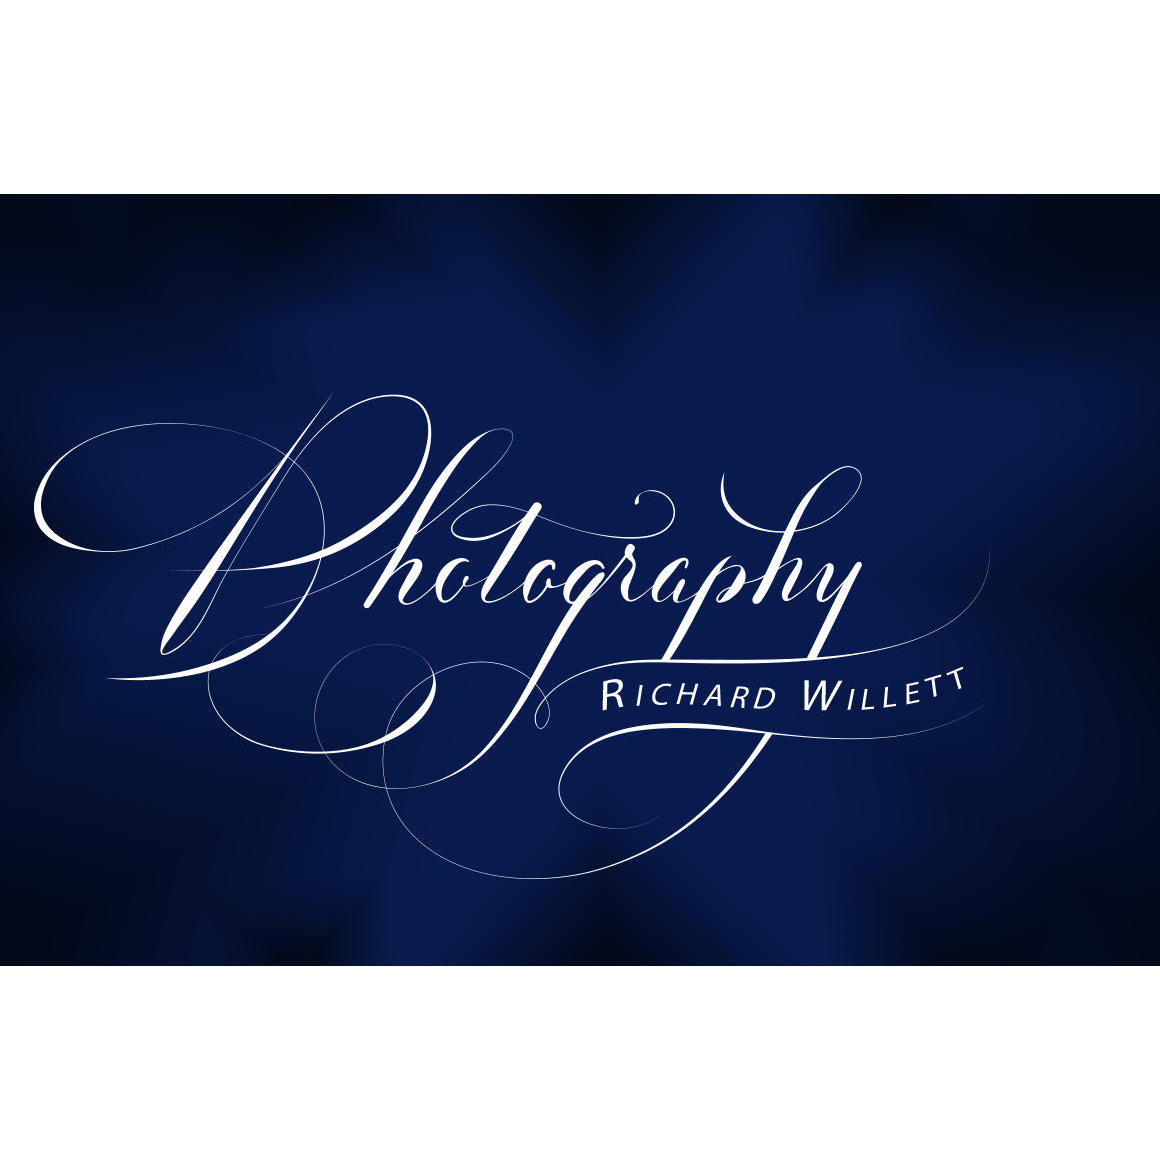 Richard Willett Photography Logo